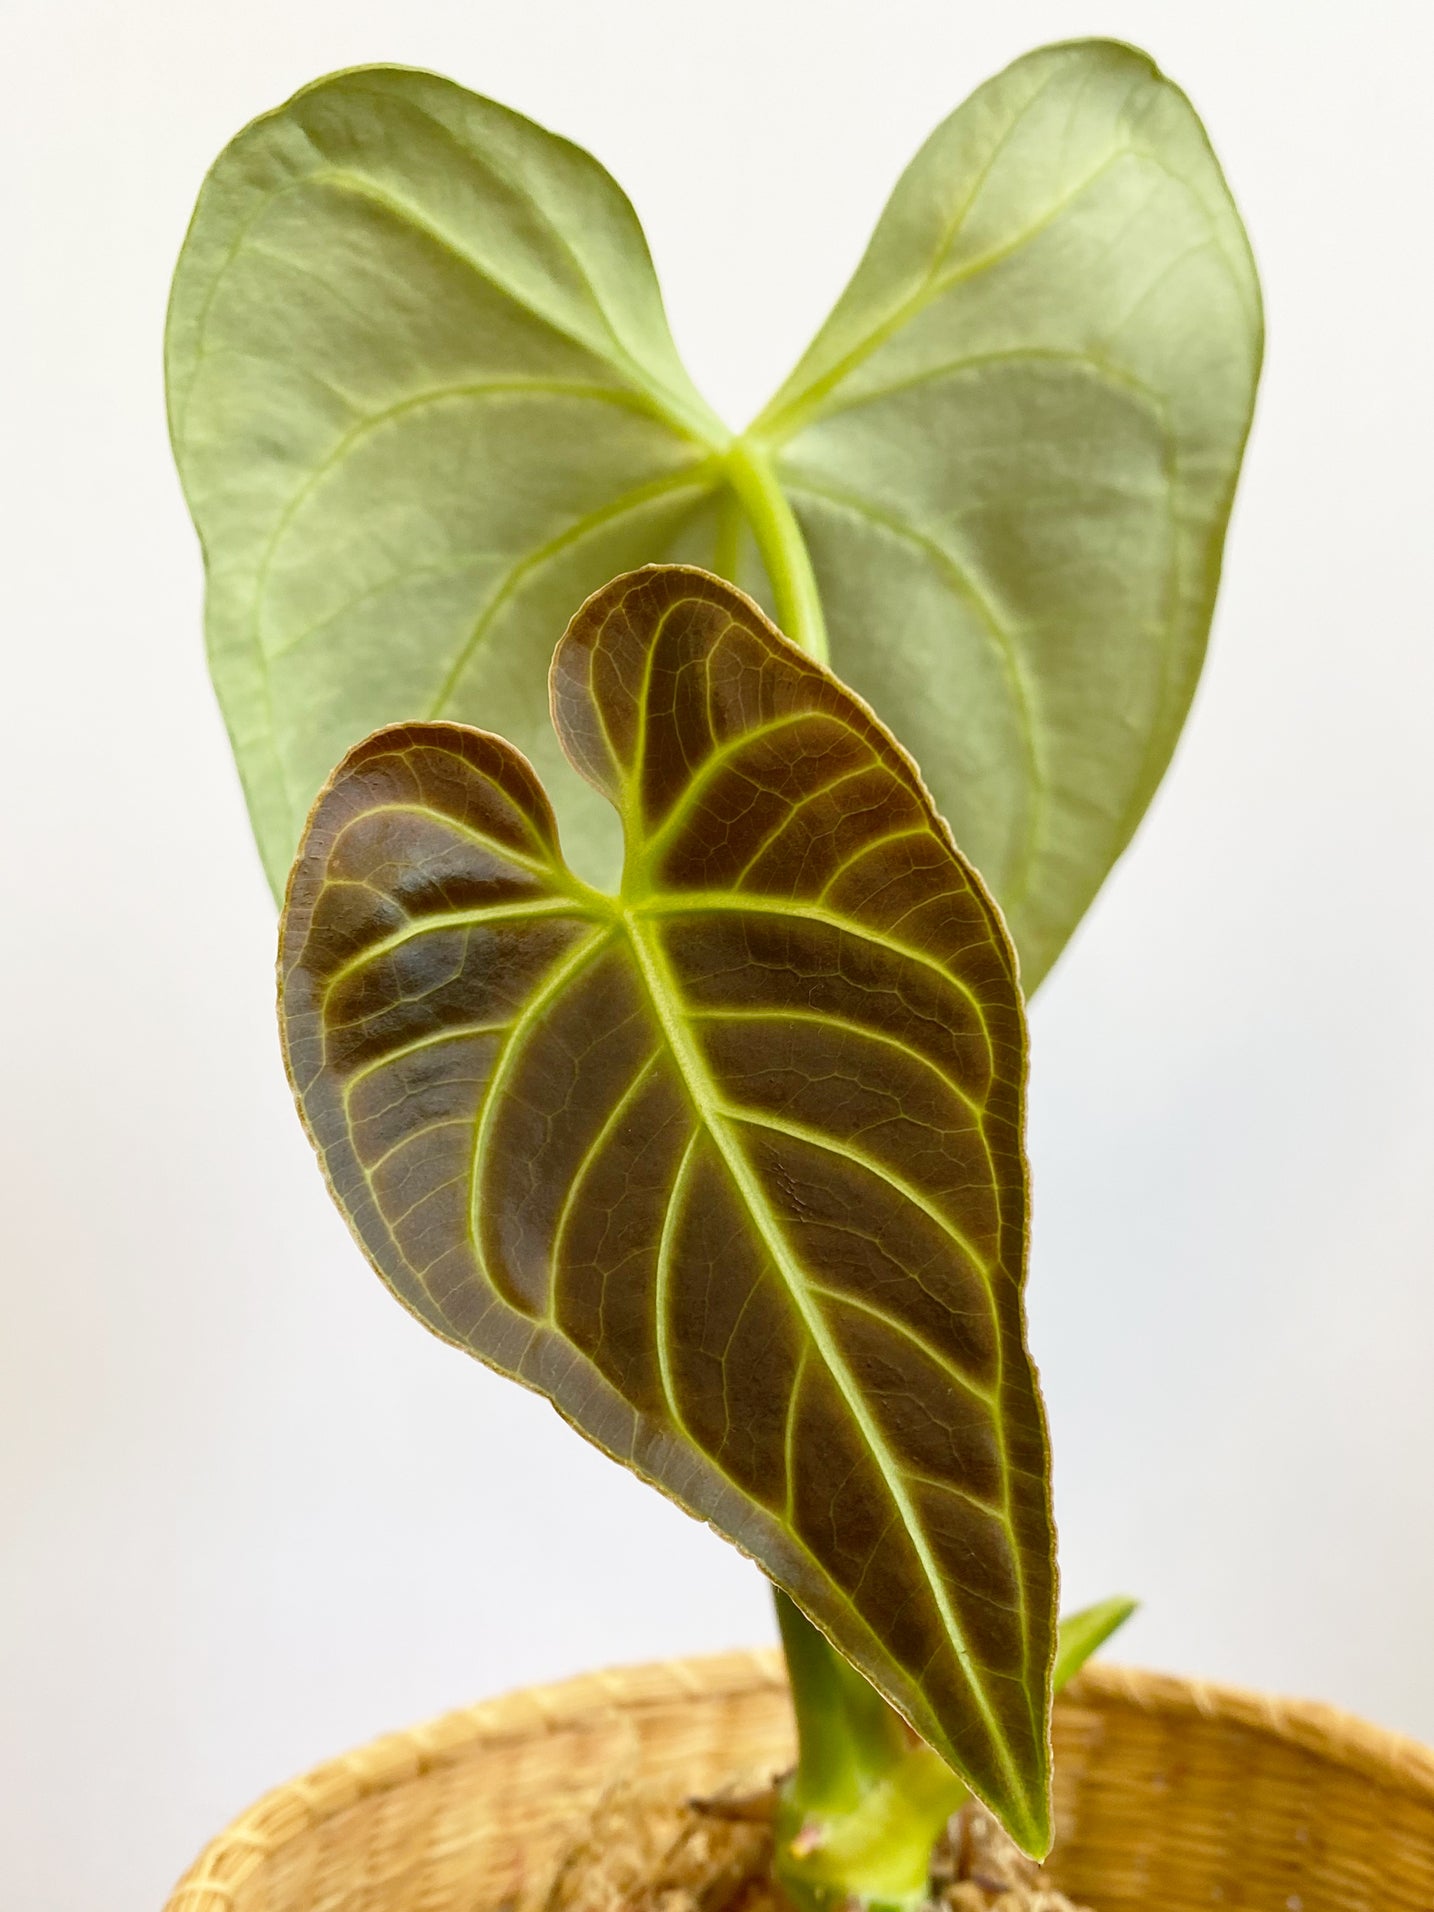 Anthurium Regale - Narrow Form in Toronto, Canada - new leaf